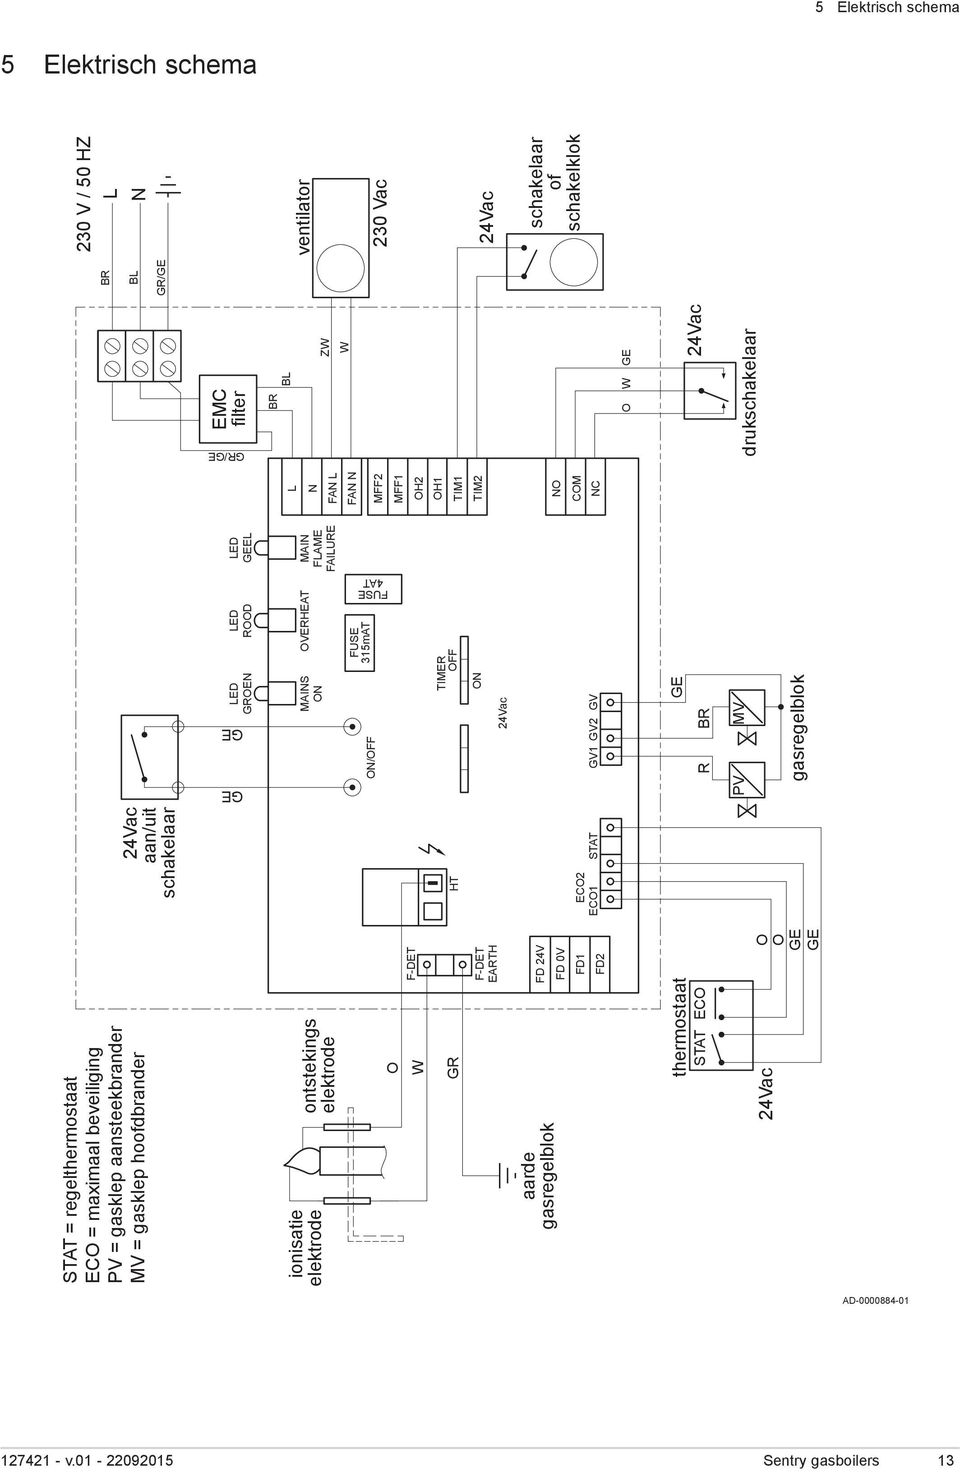 NC BL 24Vac drukschakelaar BR BL GR/GE 230 V / 50 HZ L N ventilator 230 Vac 24Vac schakelaar of schakelklok GR/GE STAT = regelthermostaat ECO = maximaal beveiliging PV = gasklep